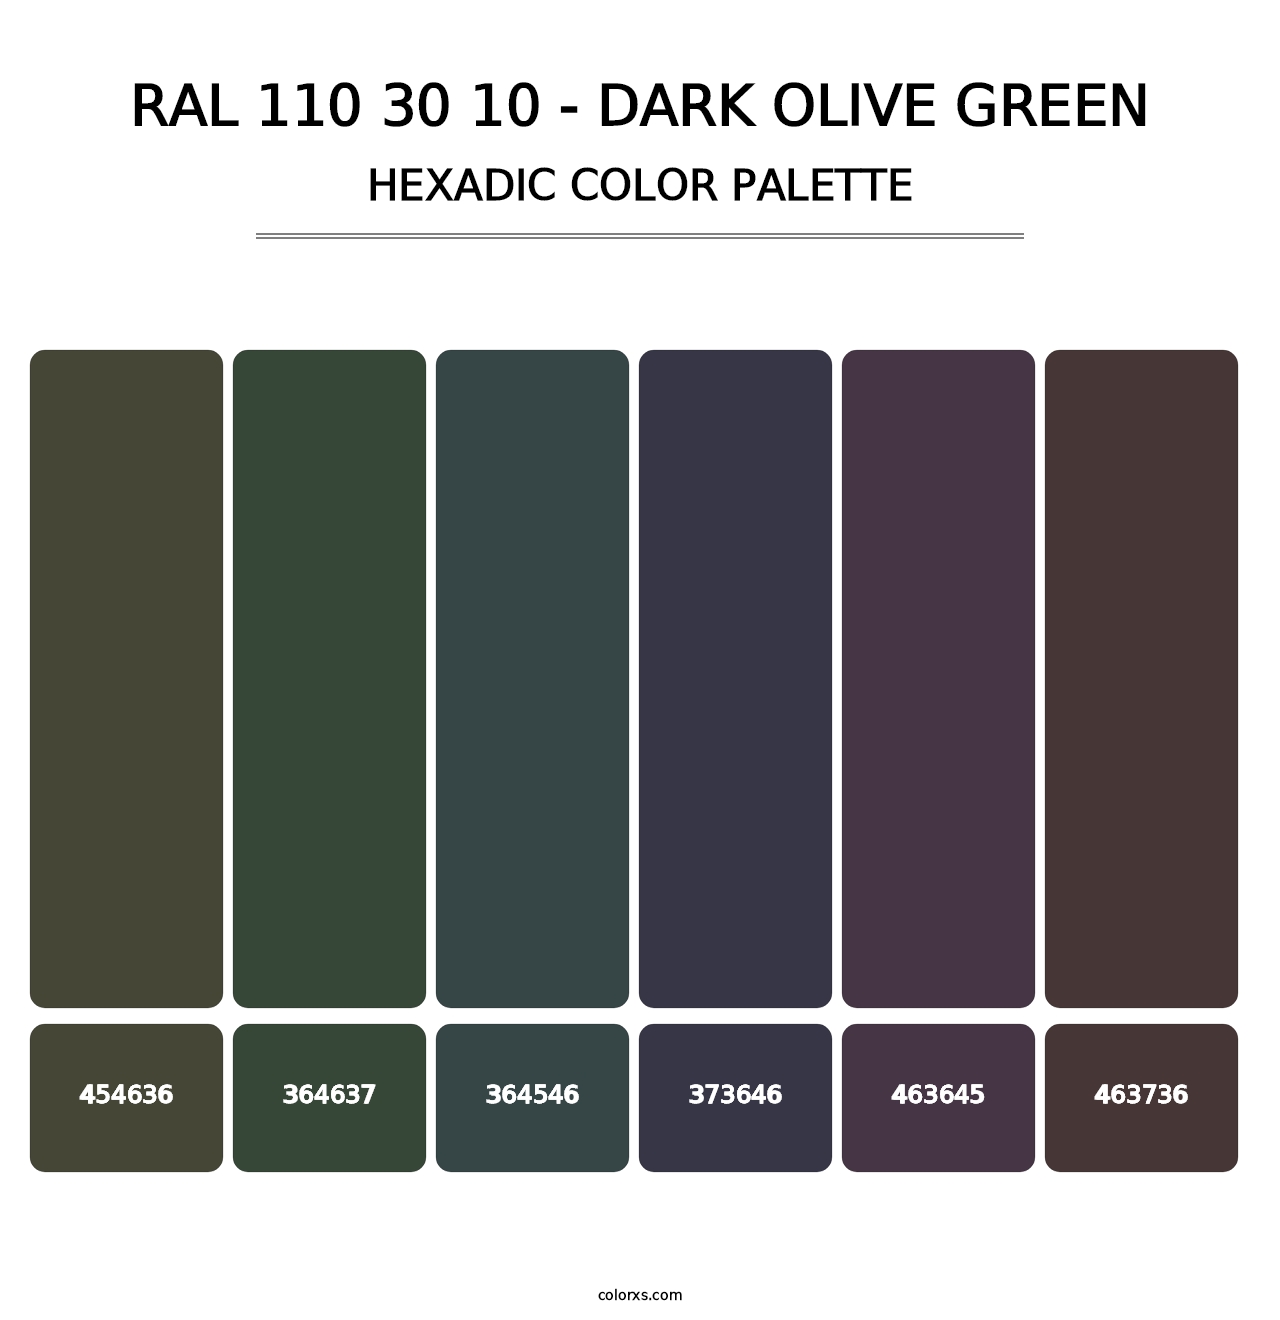 RAL 110 30 10 - Dark Olive Green - Hexadic Color Palette